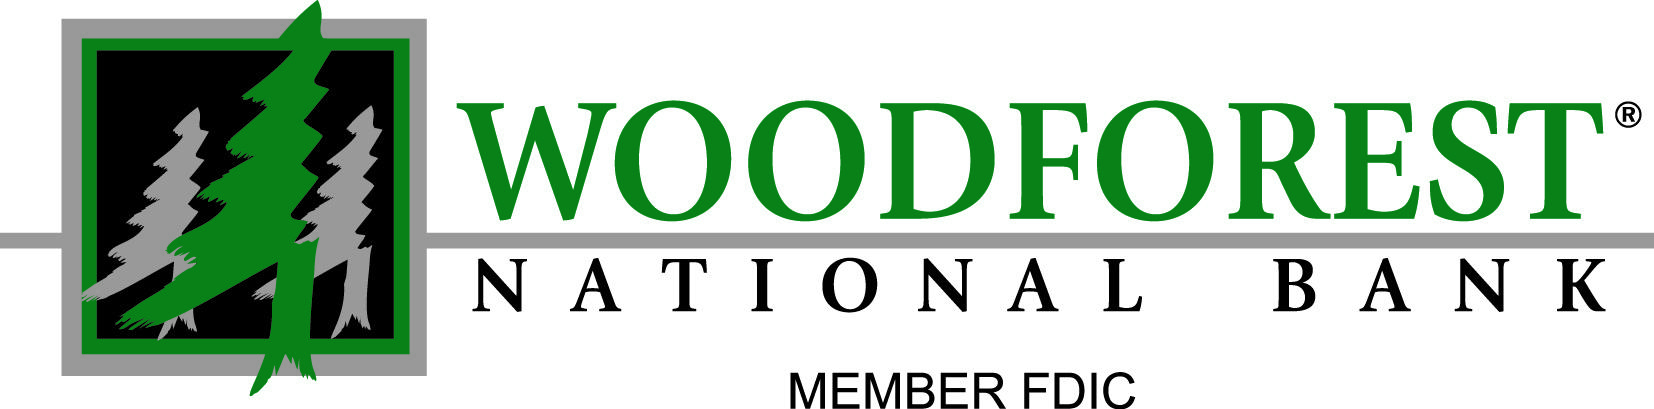 Woodforest Logo - Woodforest & LiftFund Referral Form